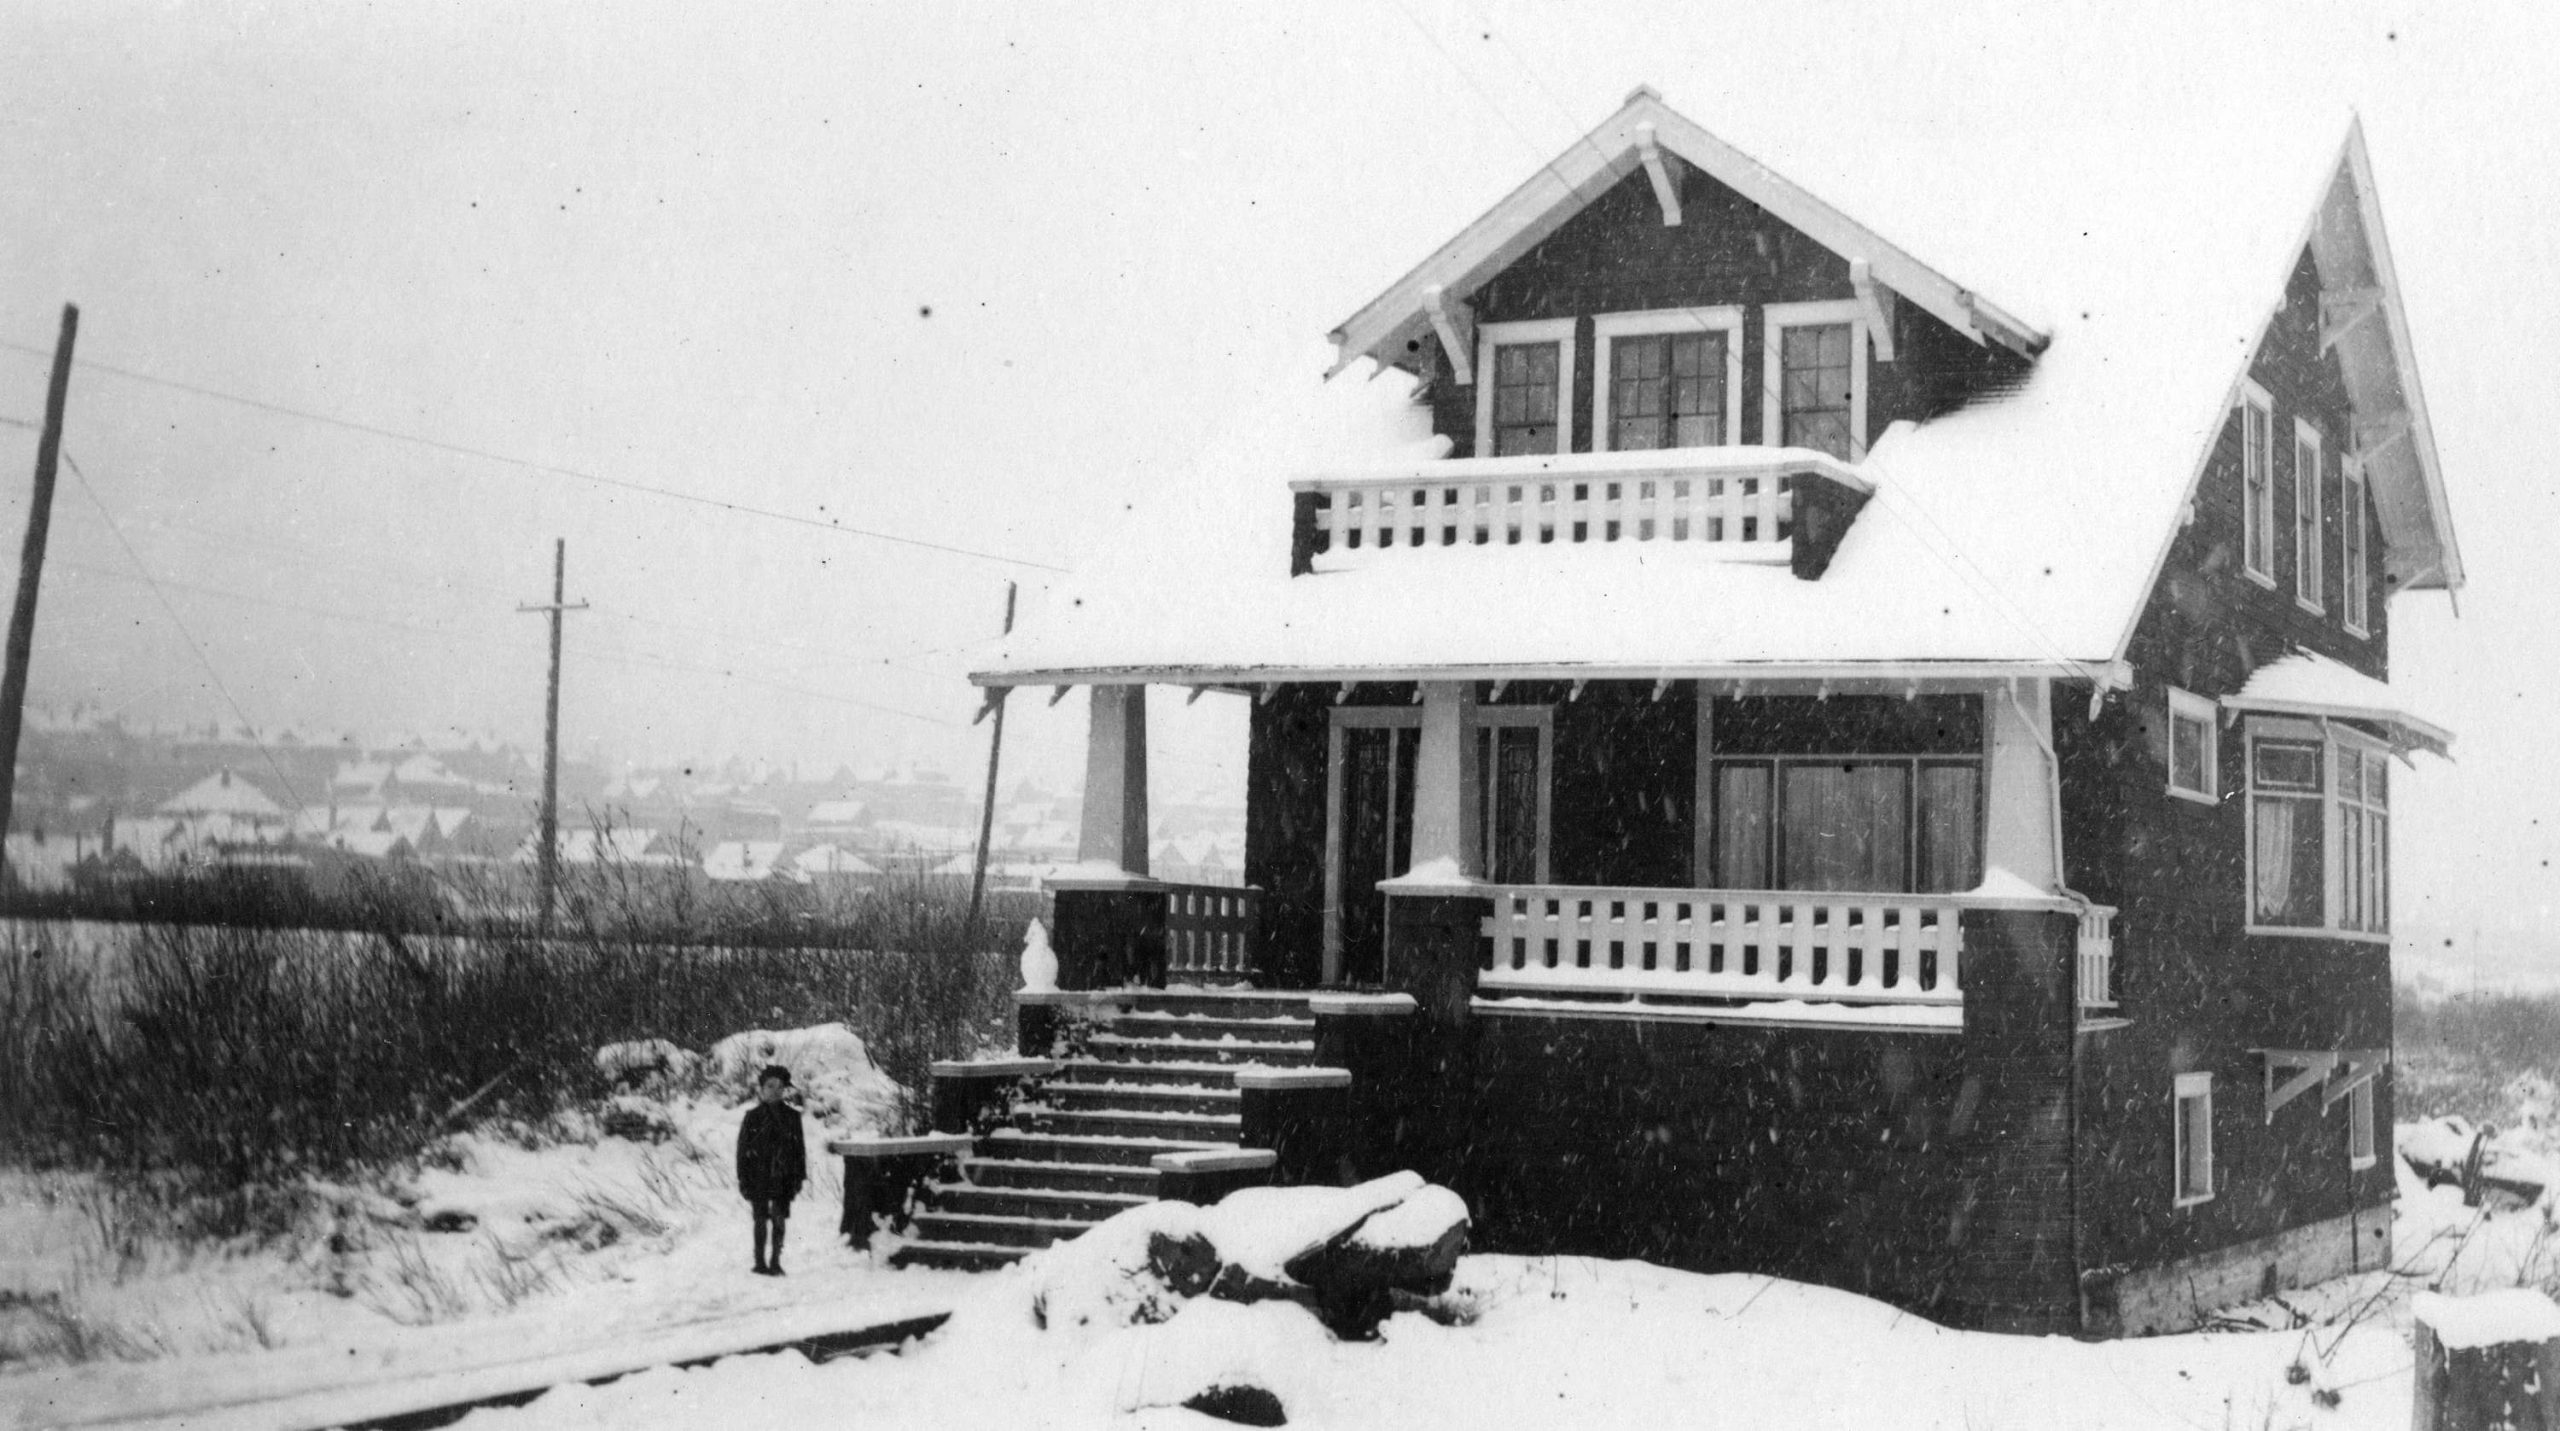 1911 - Exterior of Major J.S. Matthews' house at 1343 Maple Street